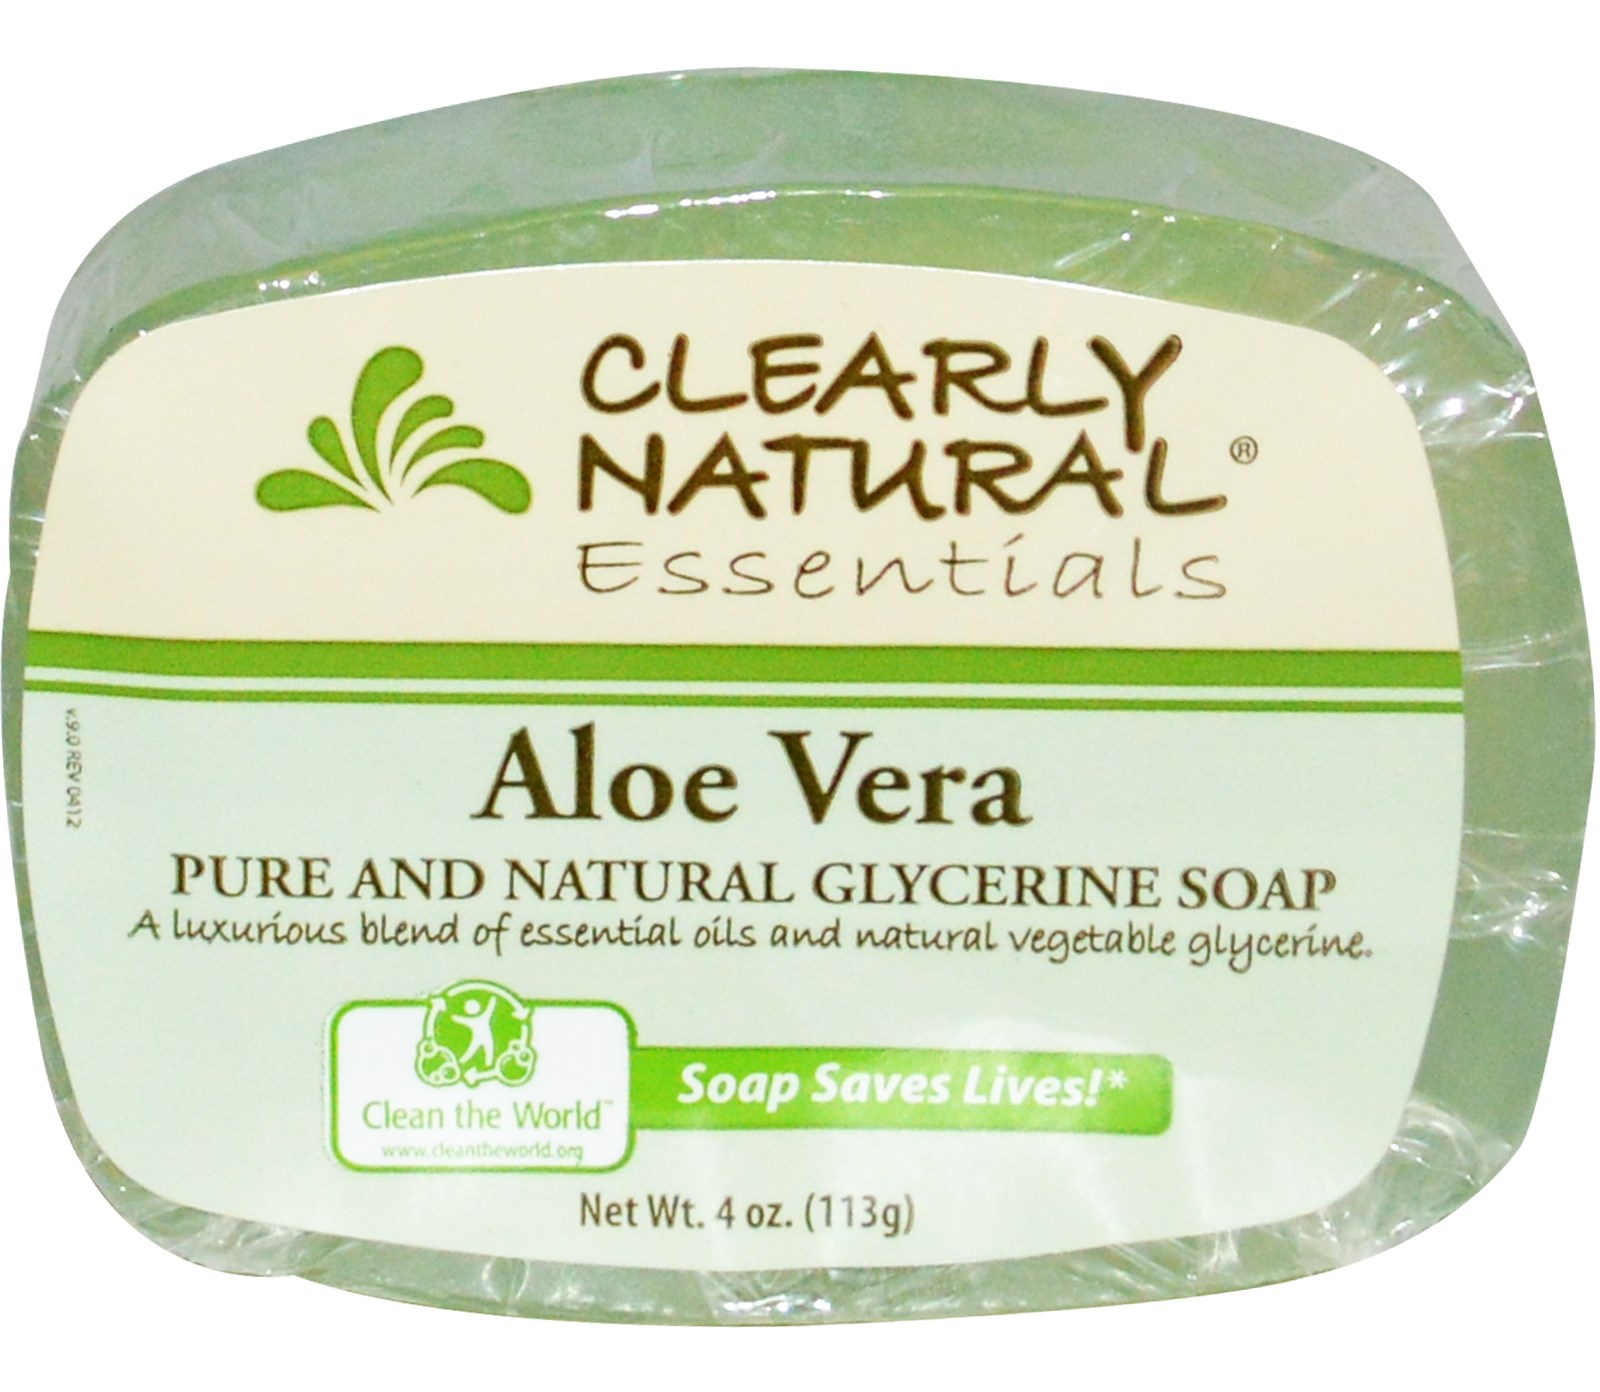 Clearly Natural Aloe Vera Glycerine Bar Soap